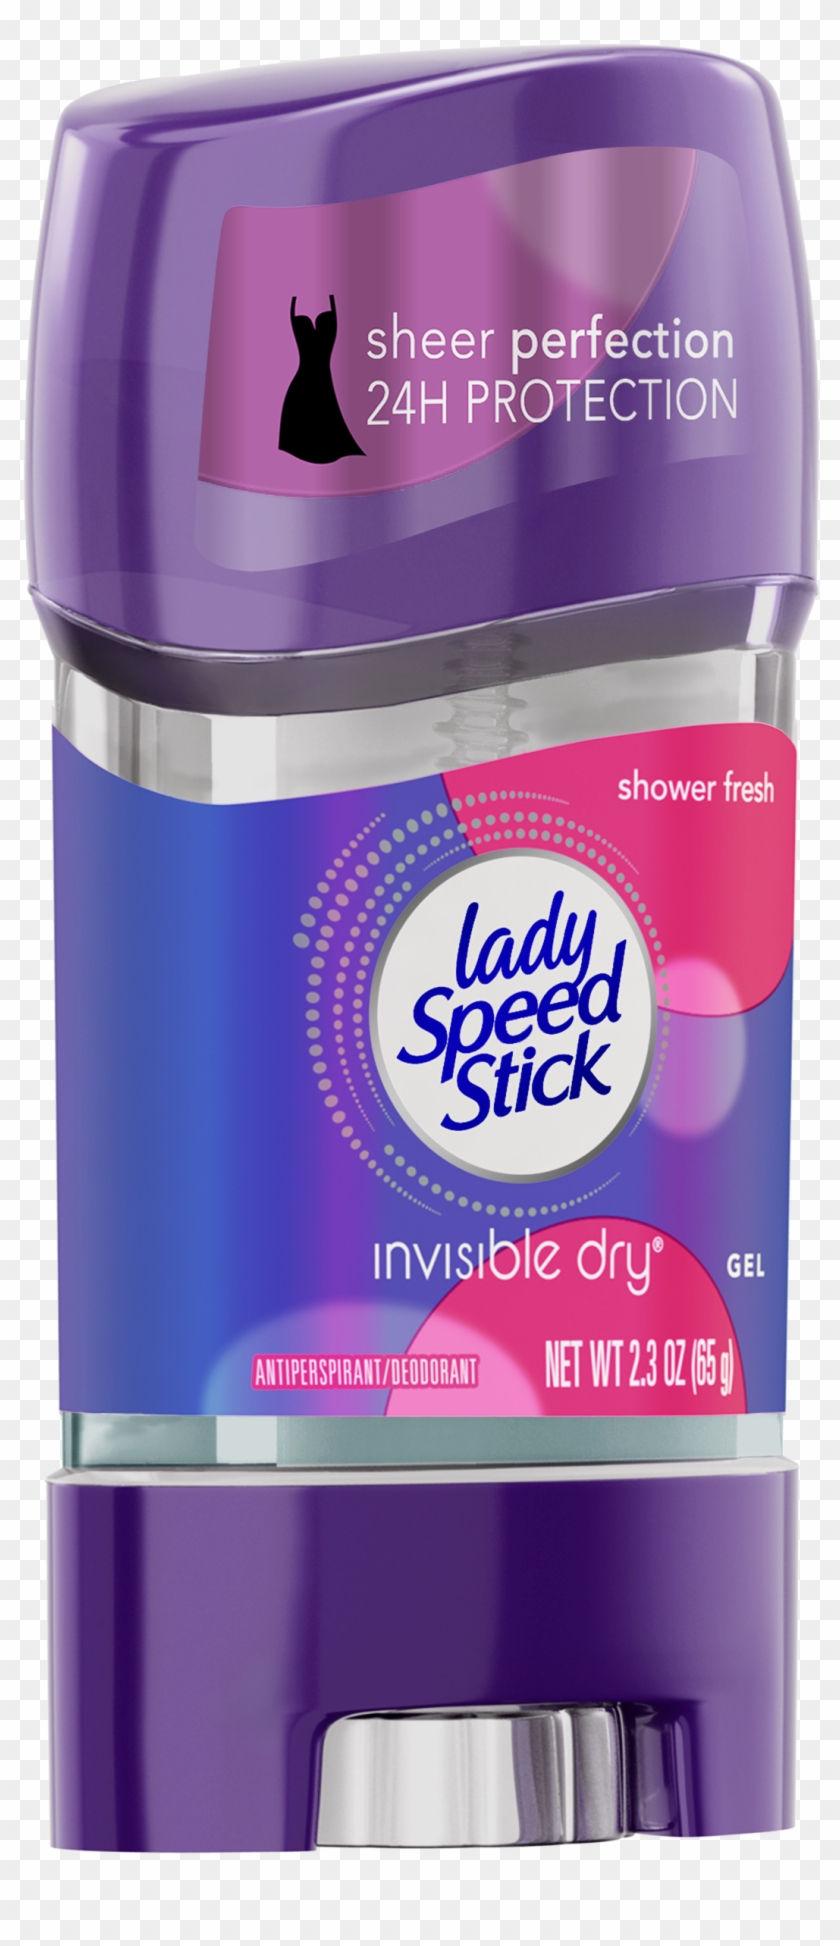 Lady Speed Stick Antiperspirant Deodorant, Shower Fresh, - Plastic Bottle Clipart #4809637